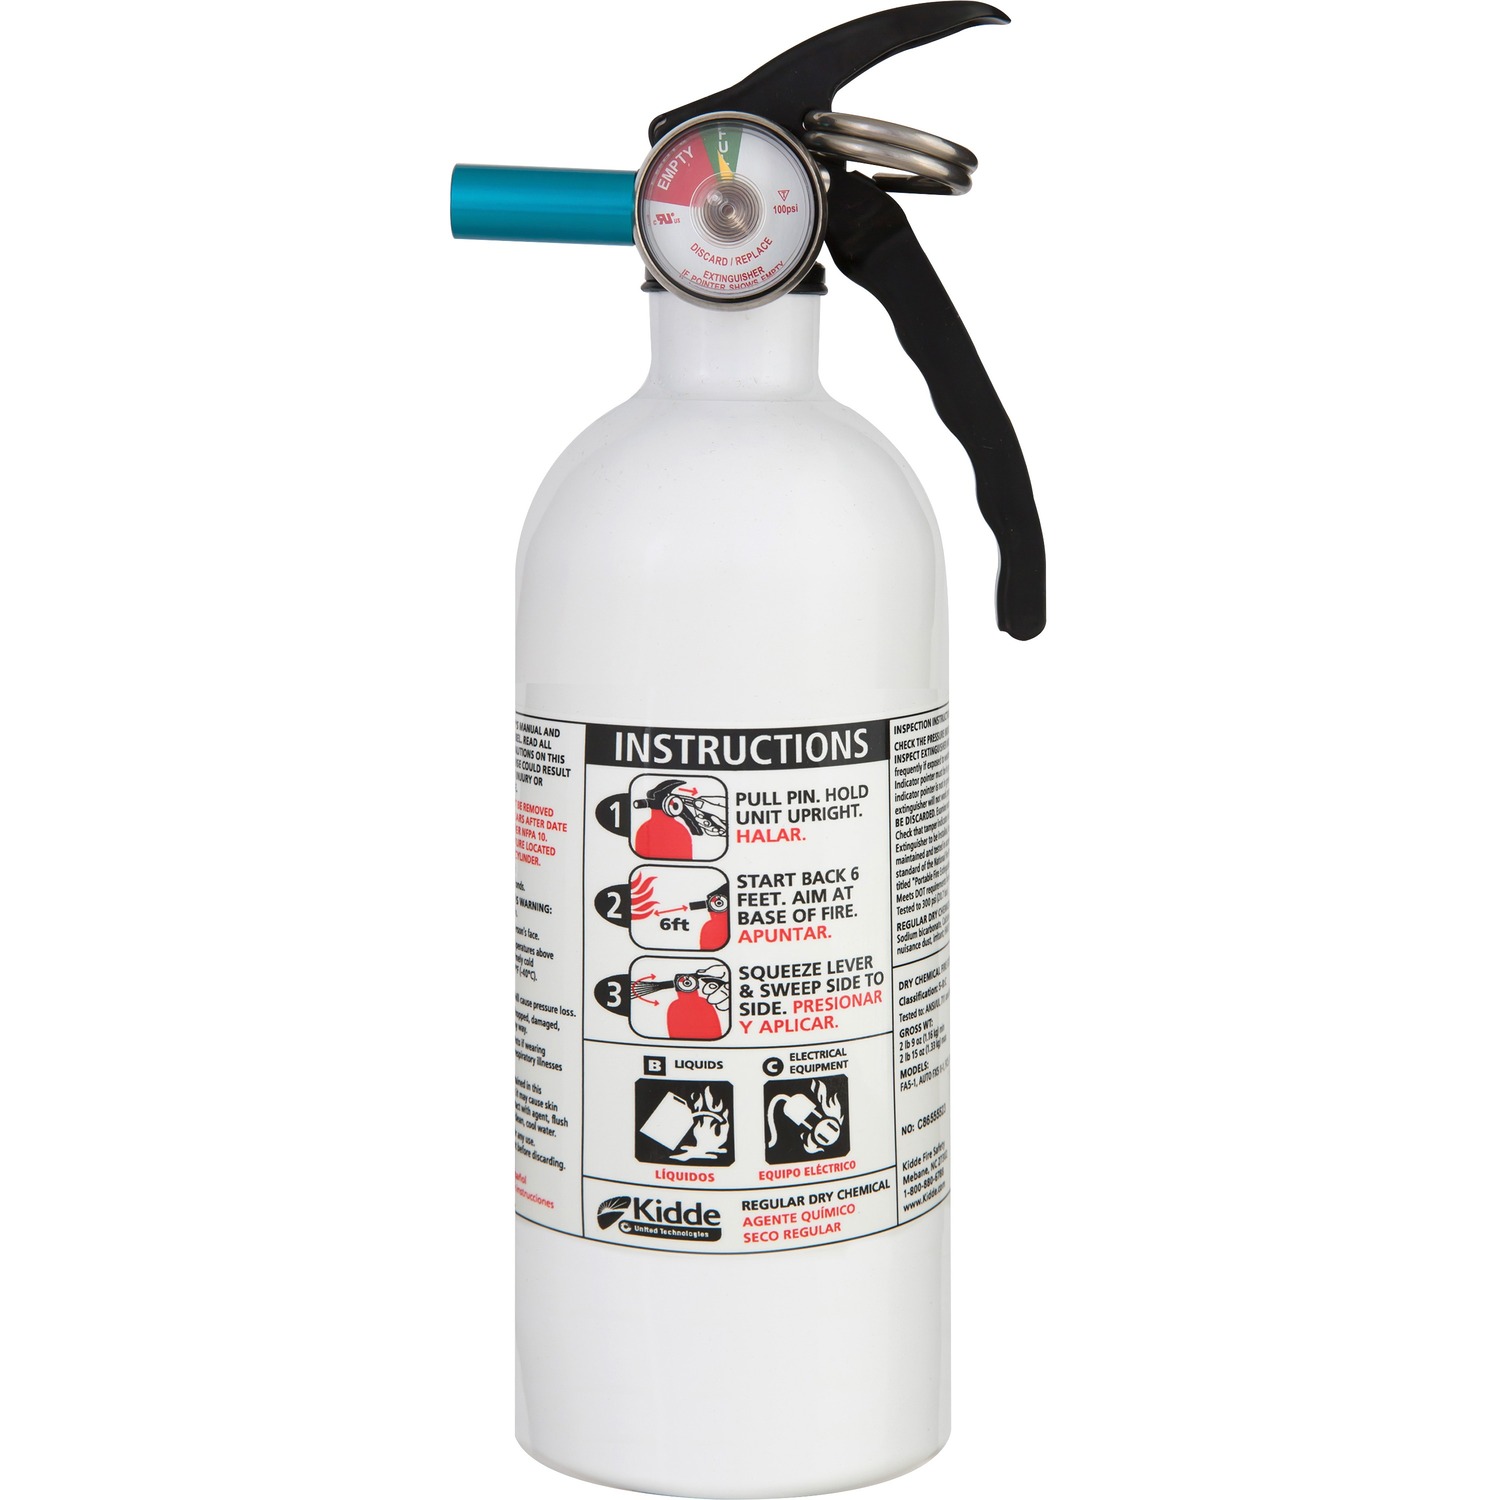 Kidde FX5 II Auto Fire Extinguisher, 5 B:C Rated - image 1 of 2